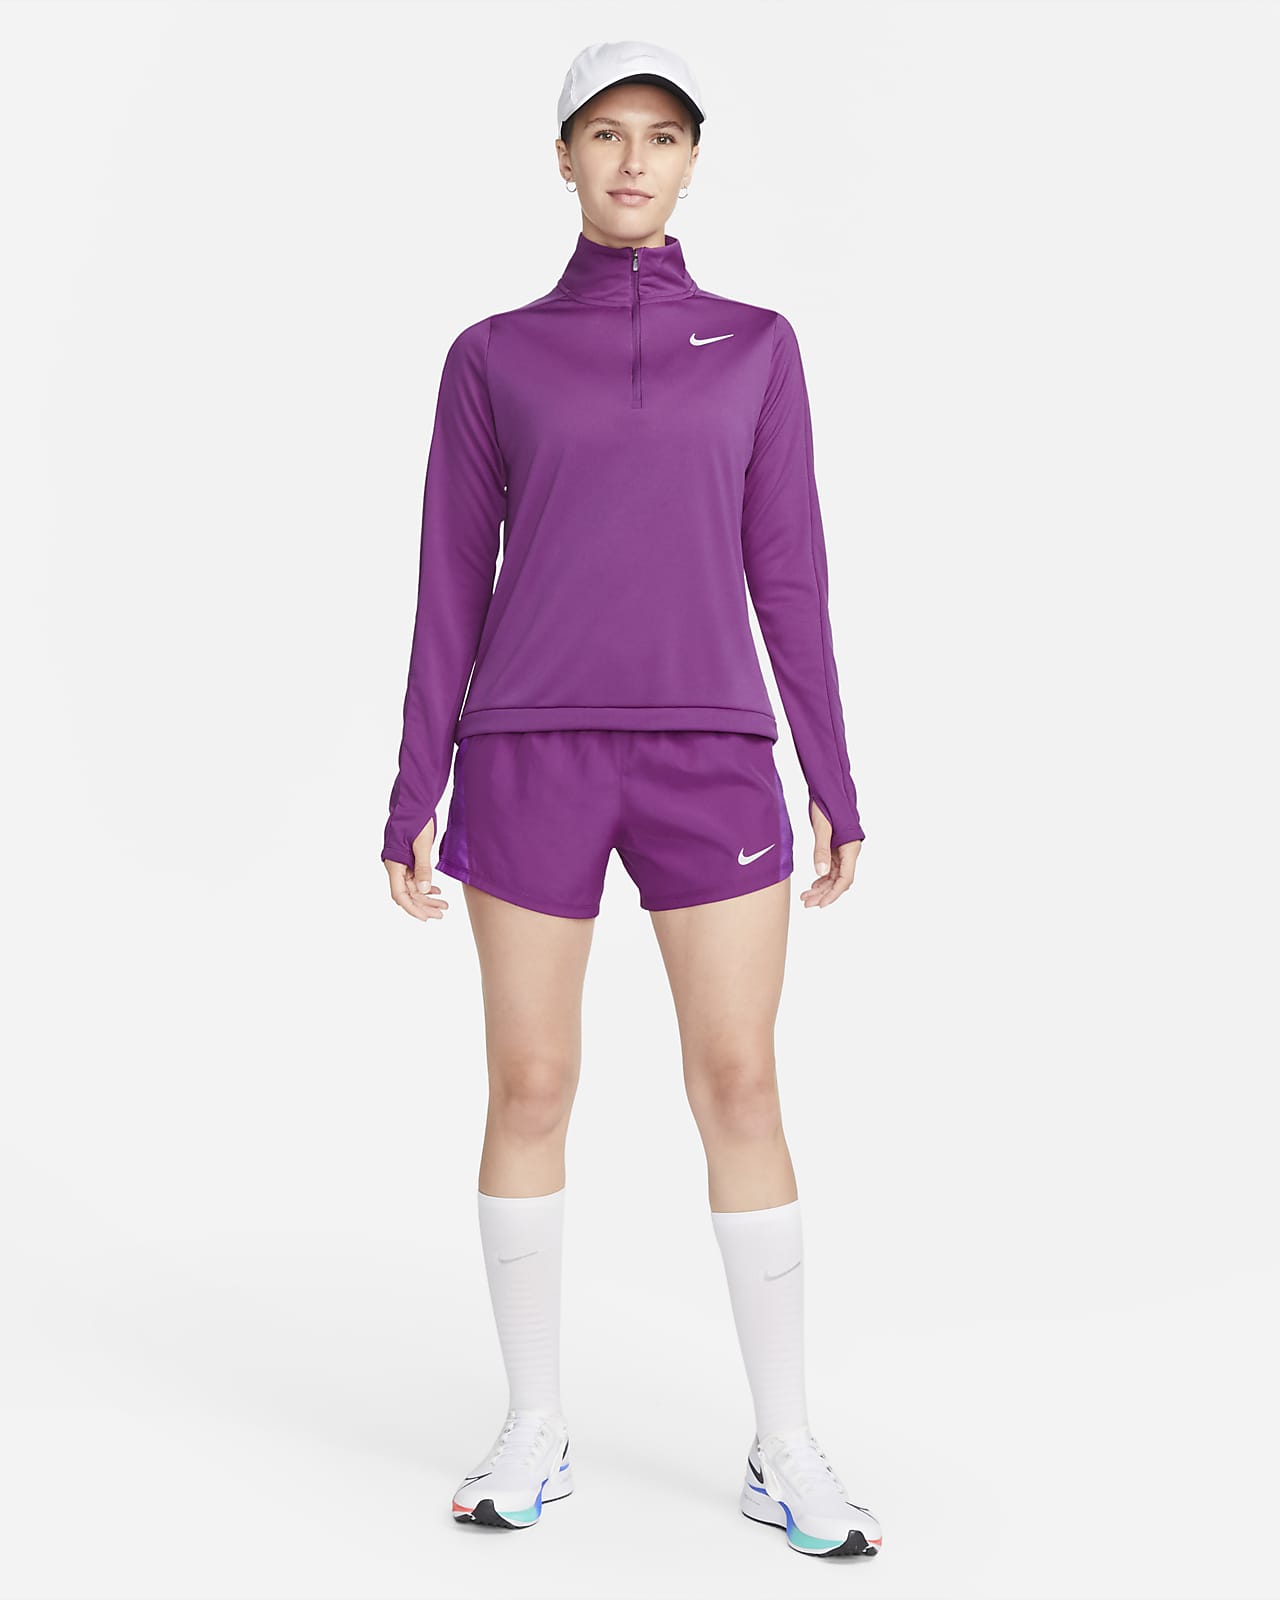 10K Pantalón corto de running Mujer. Nike ES